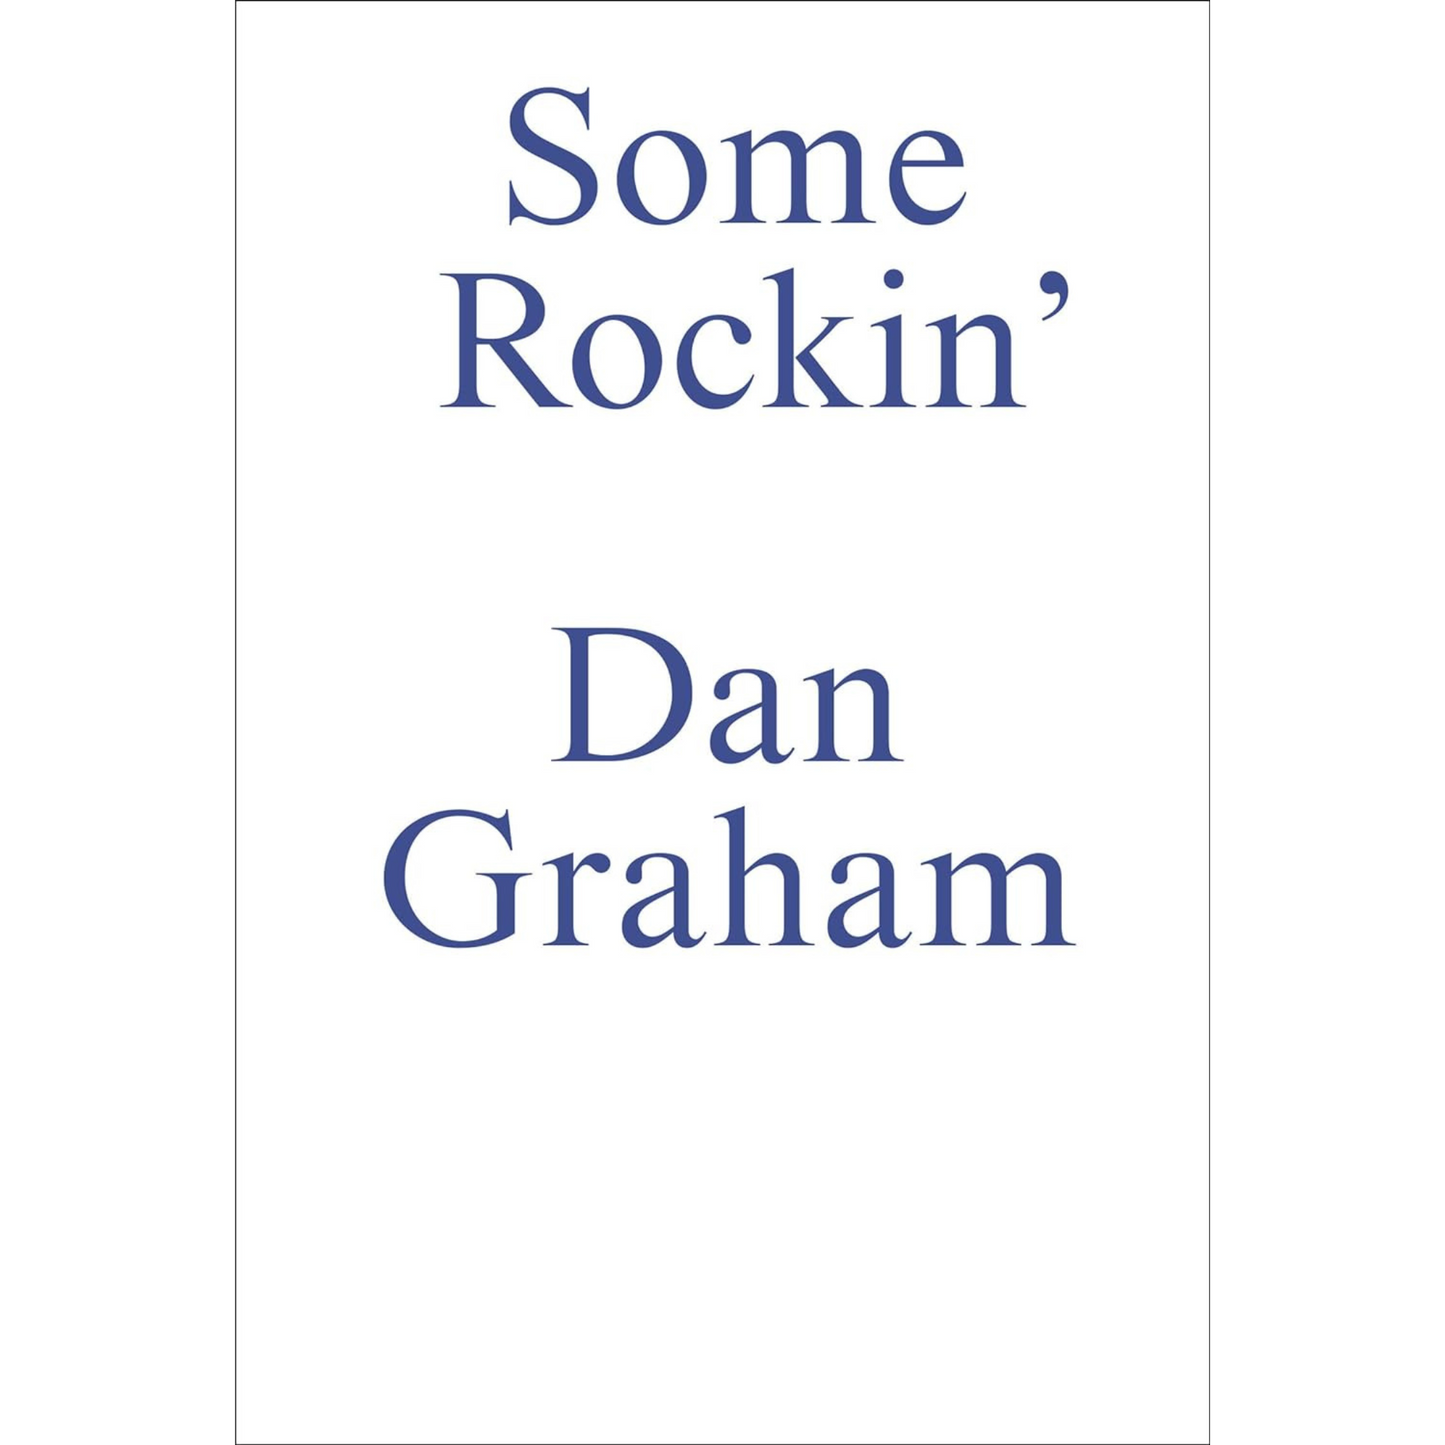 Some Rockin' - Dan Graham Interviews